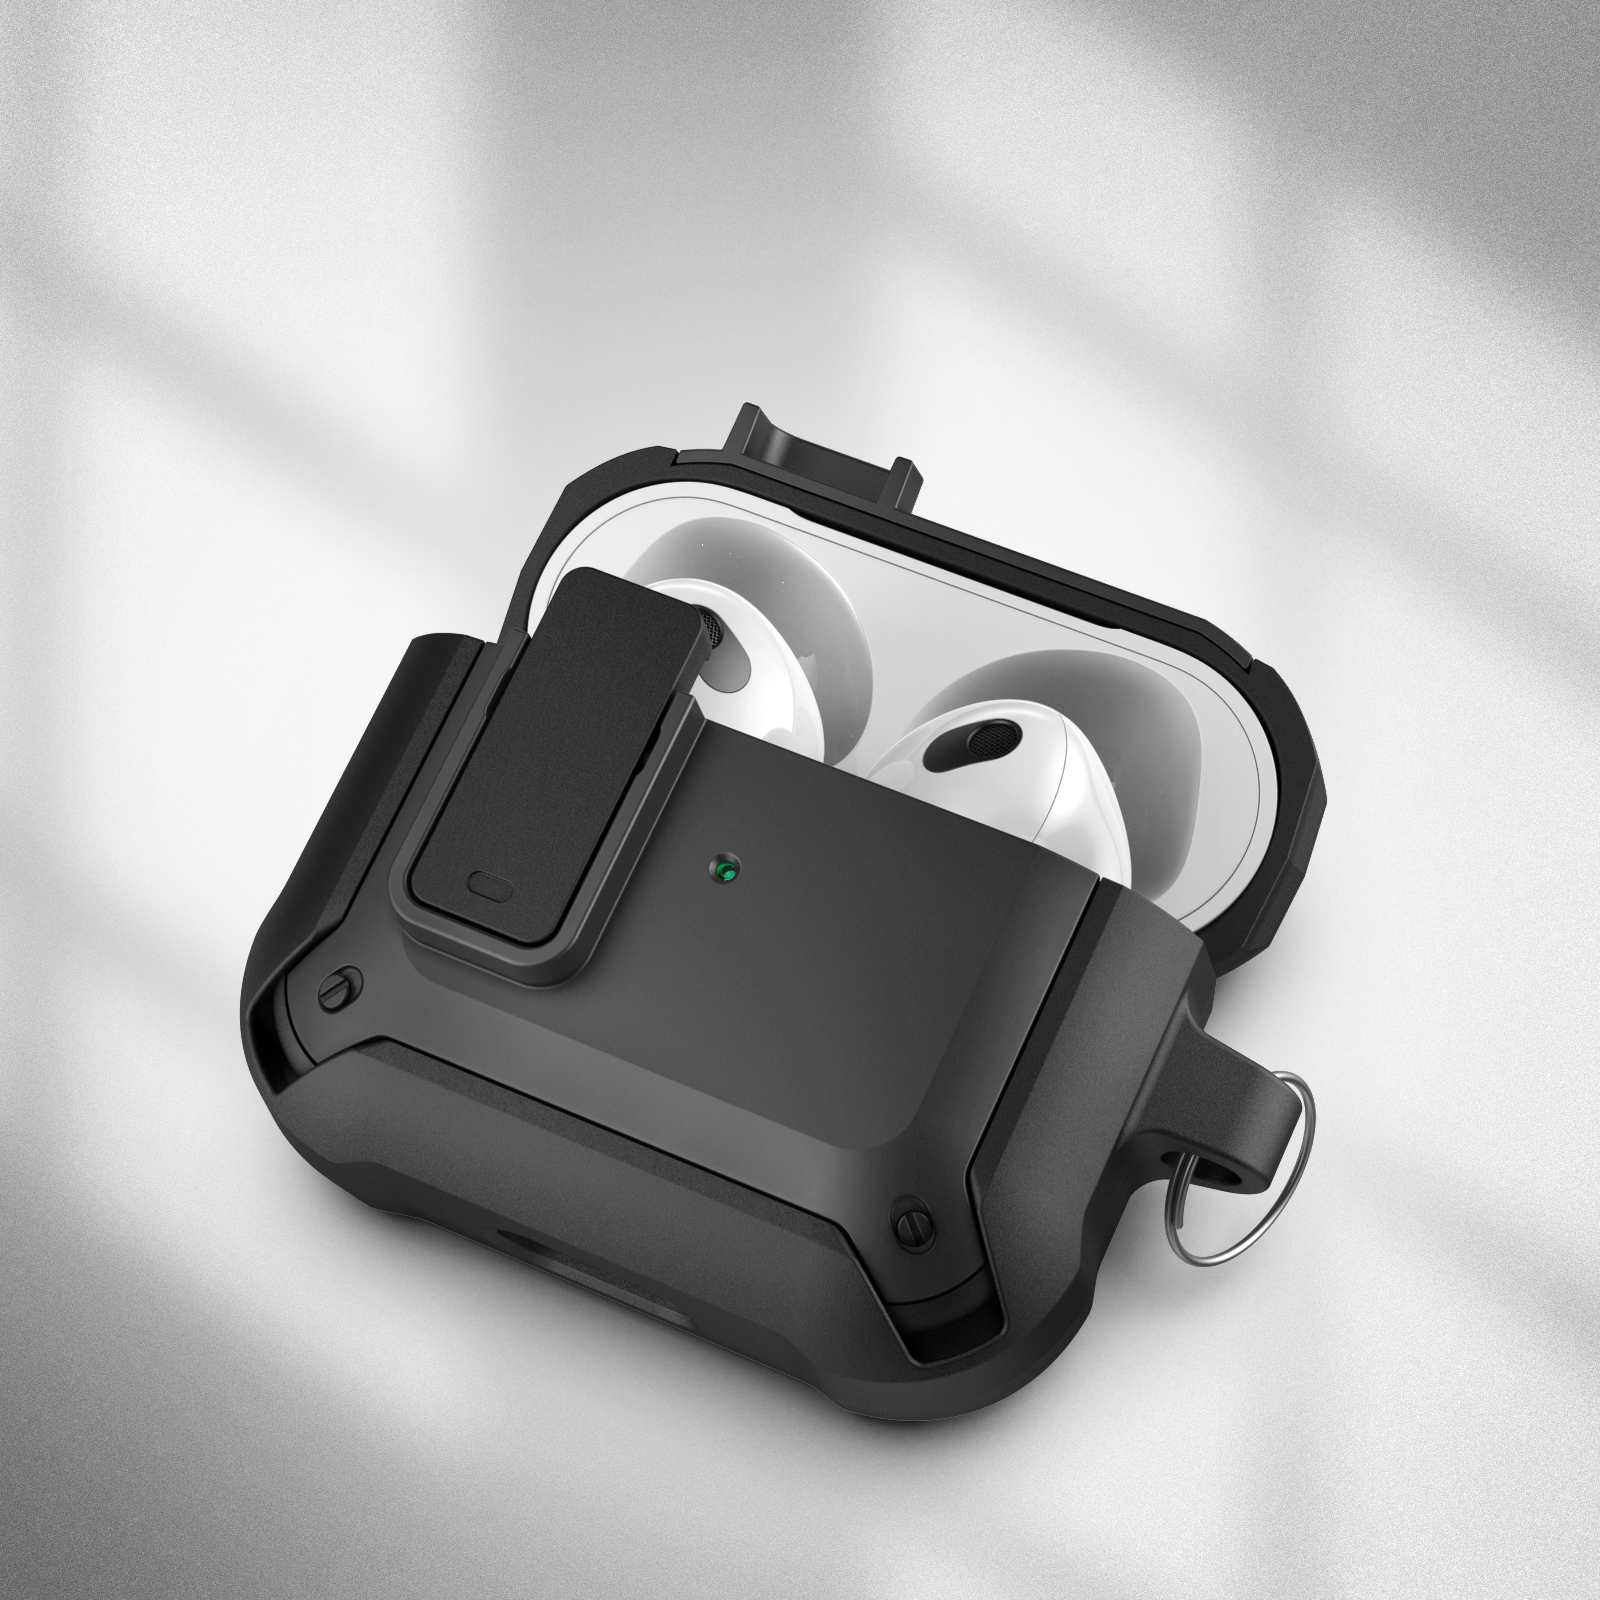 Spigen  Protective Airpods Pro Case with Keychain - Matte Black